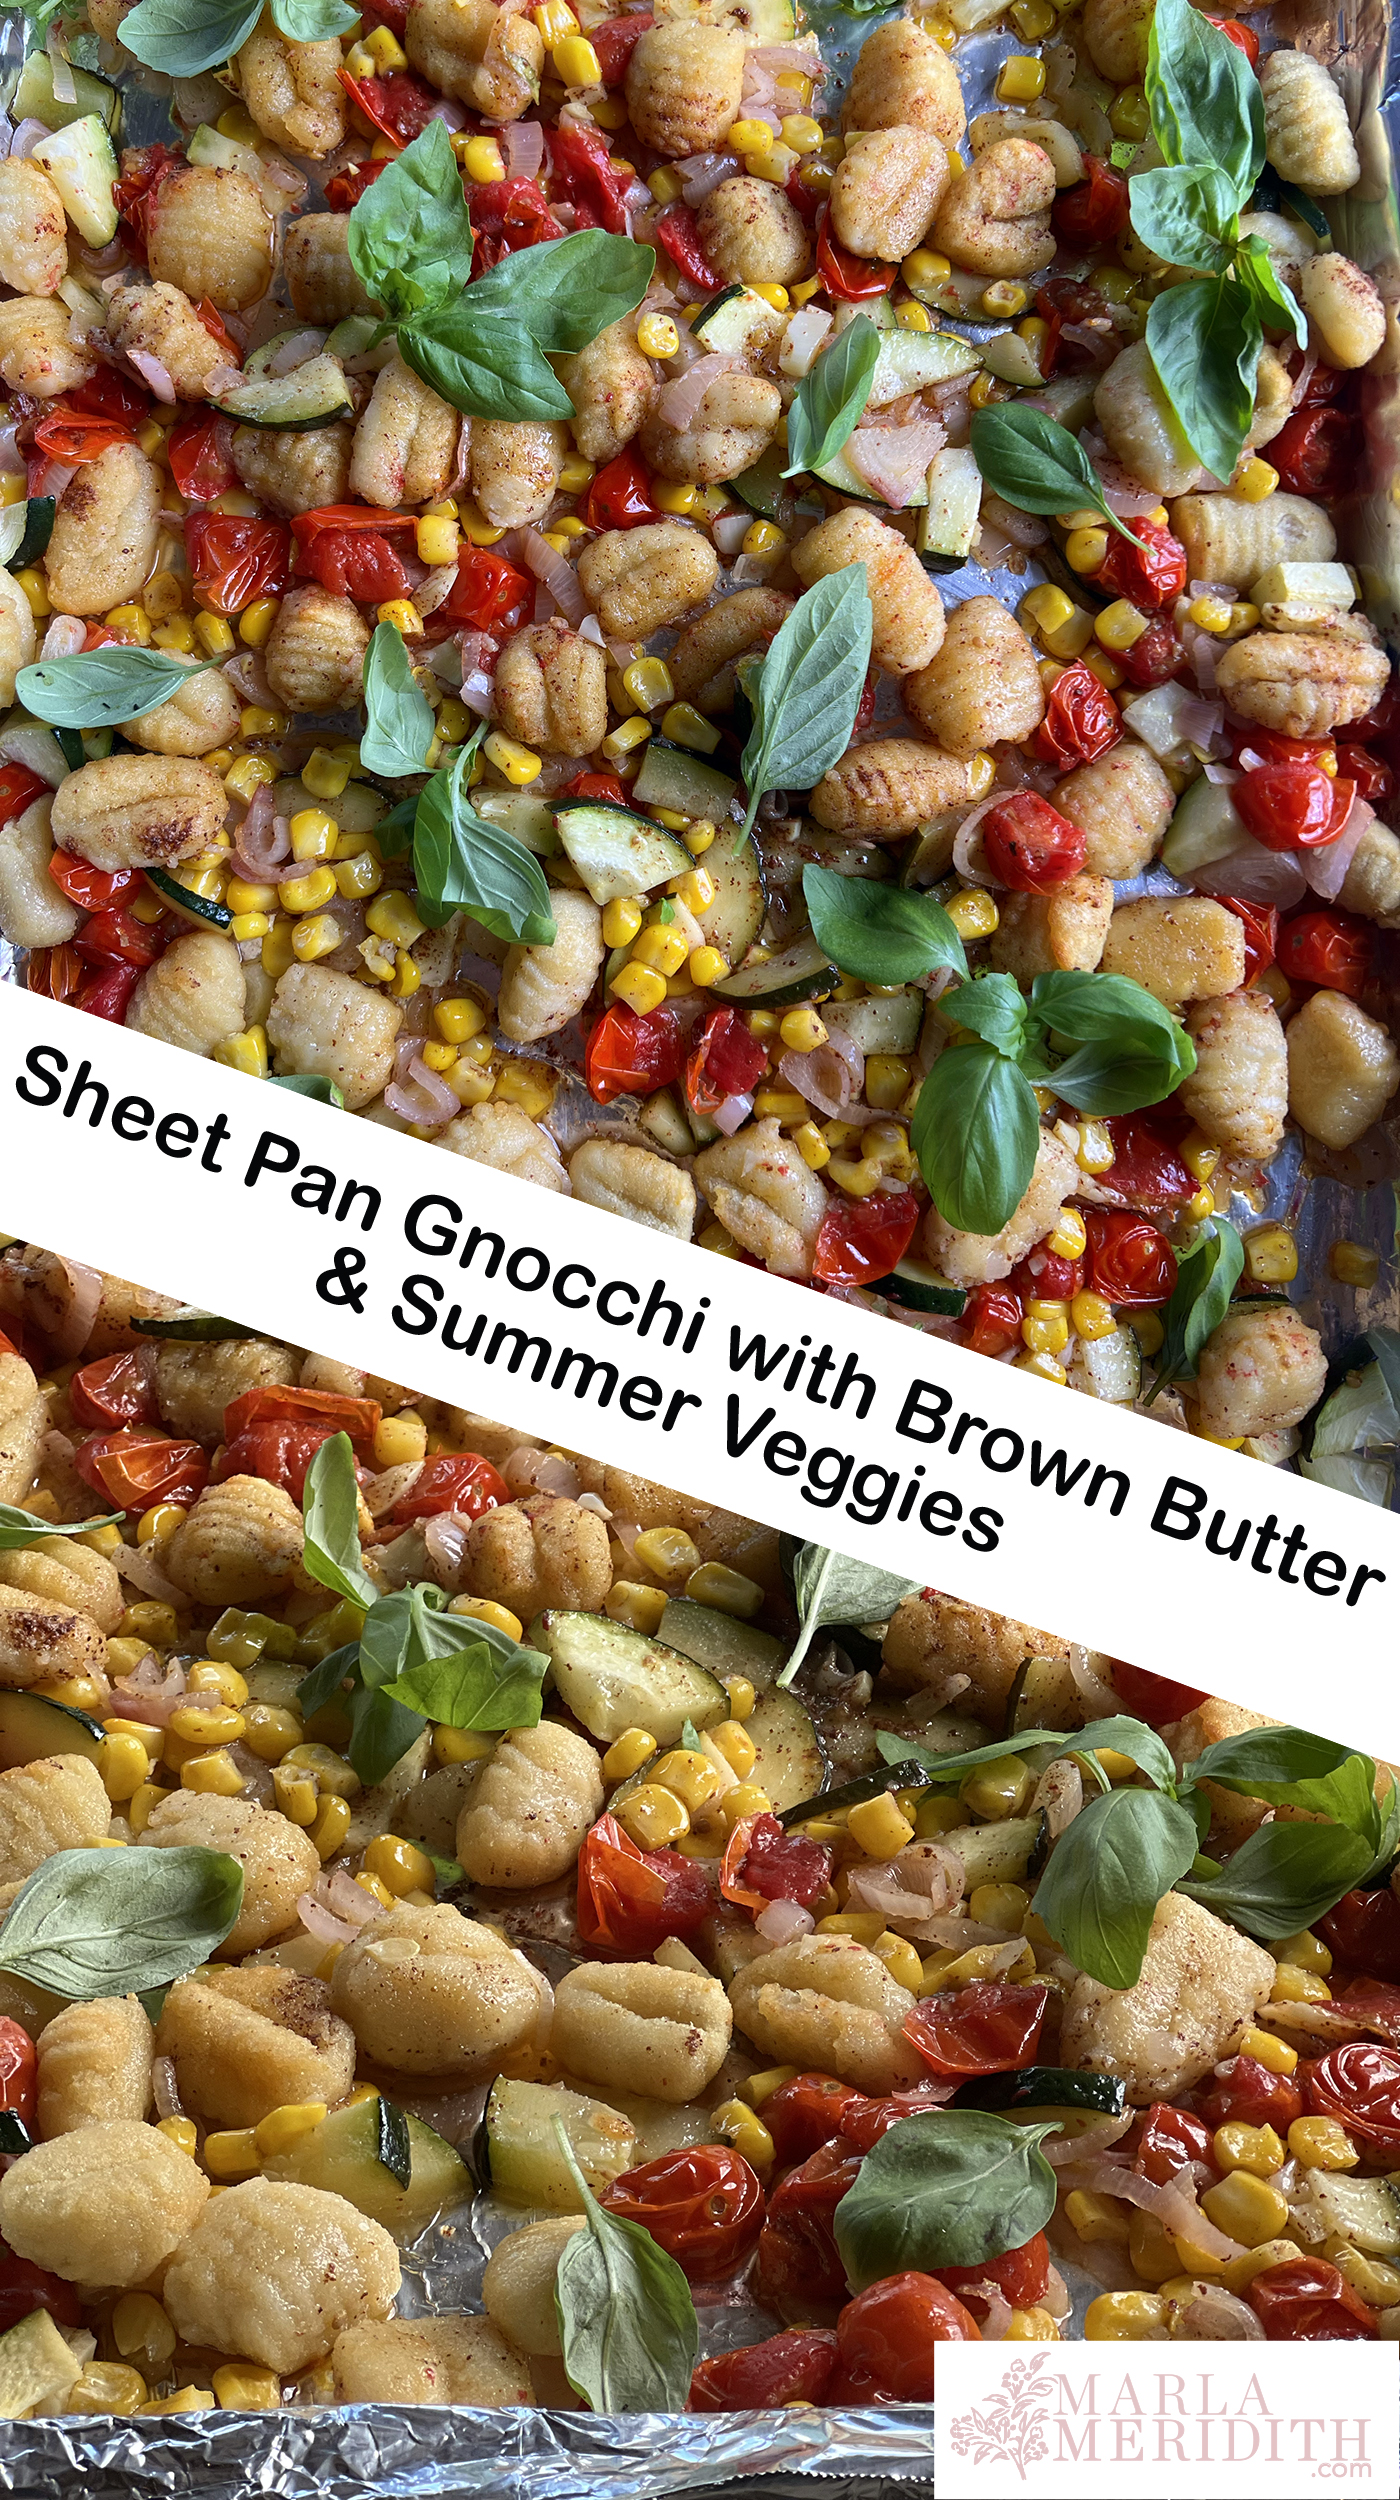 Sheet Pan Gnocchi with Brown Butter & Summer Veggies recipe